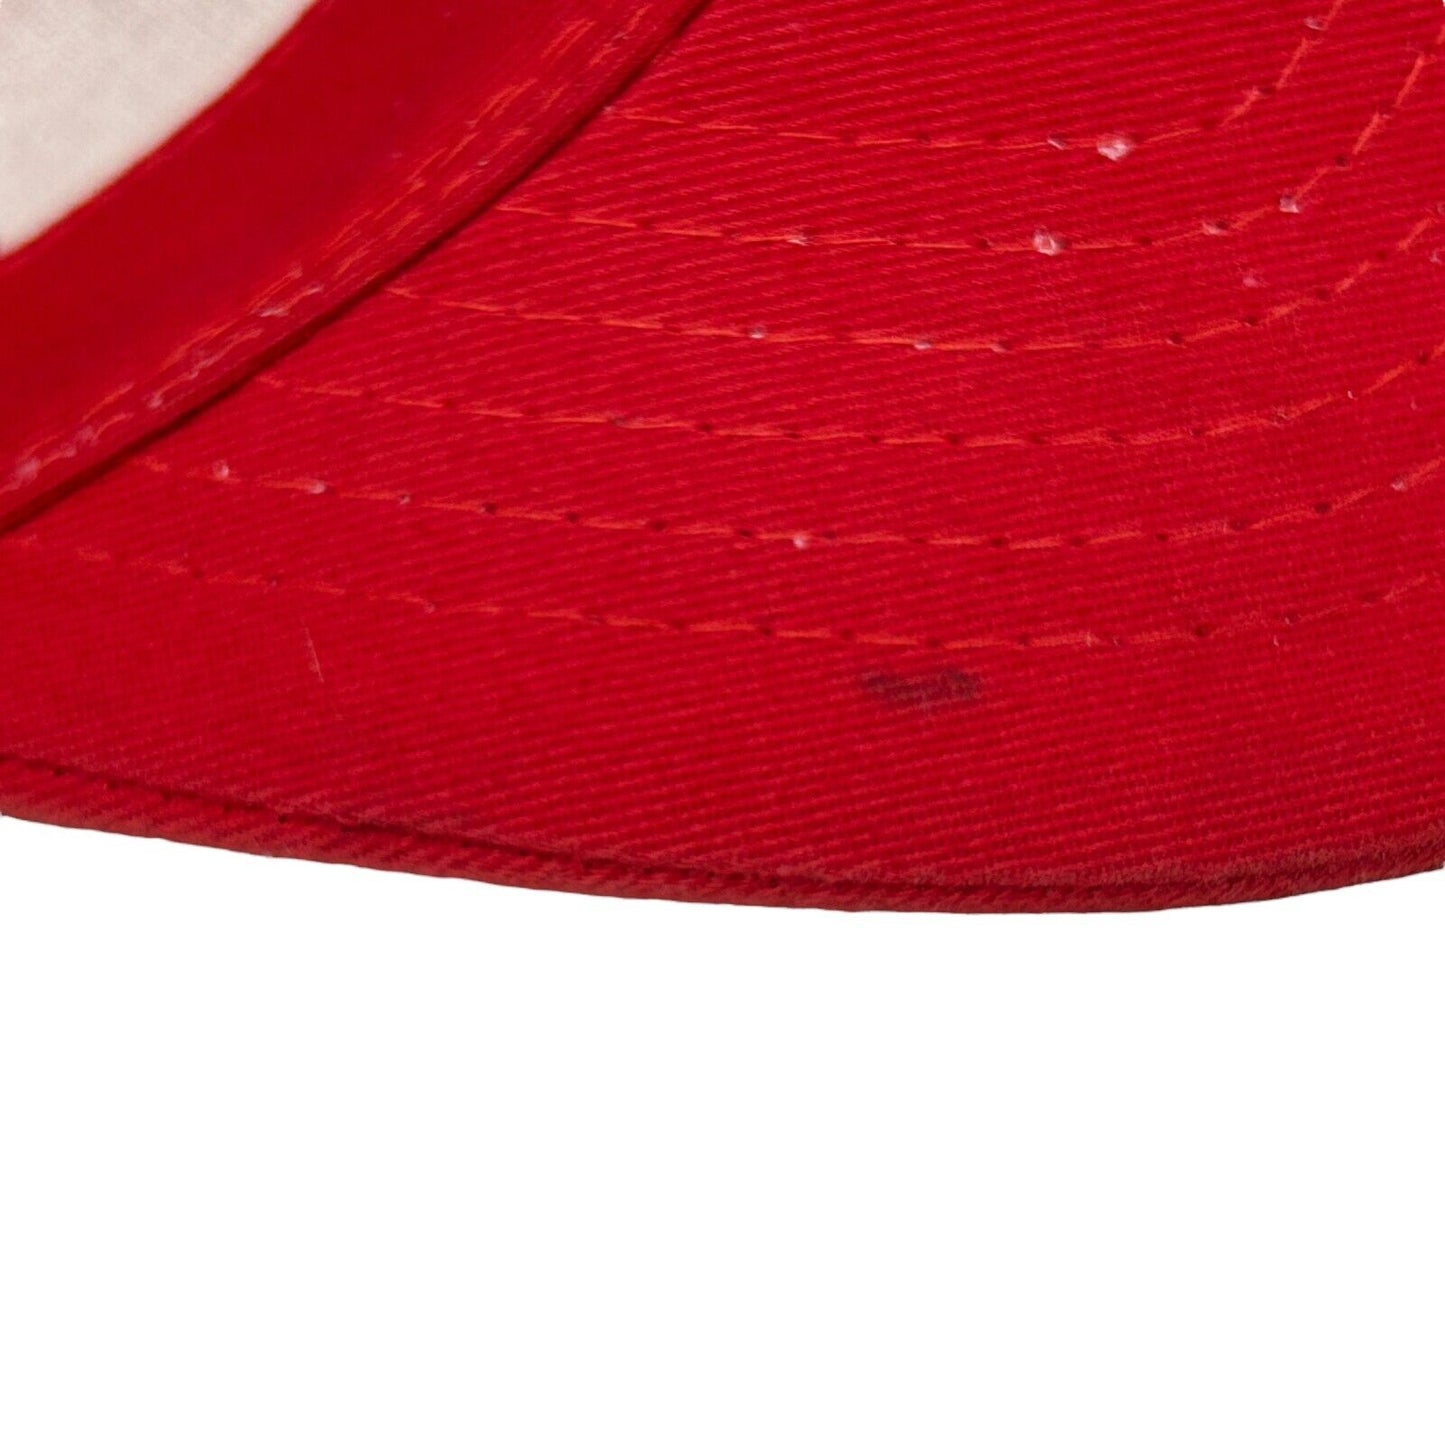 Harrisburg Senators 2012 Signed Youth Hat MiLB Autographed Red Kids Baseball Cap